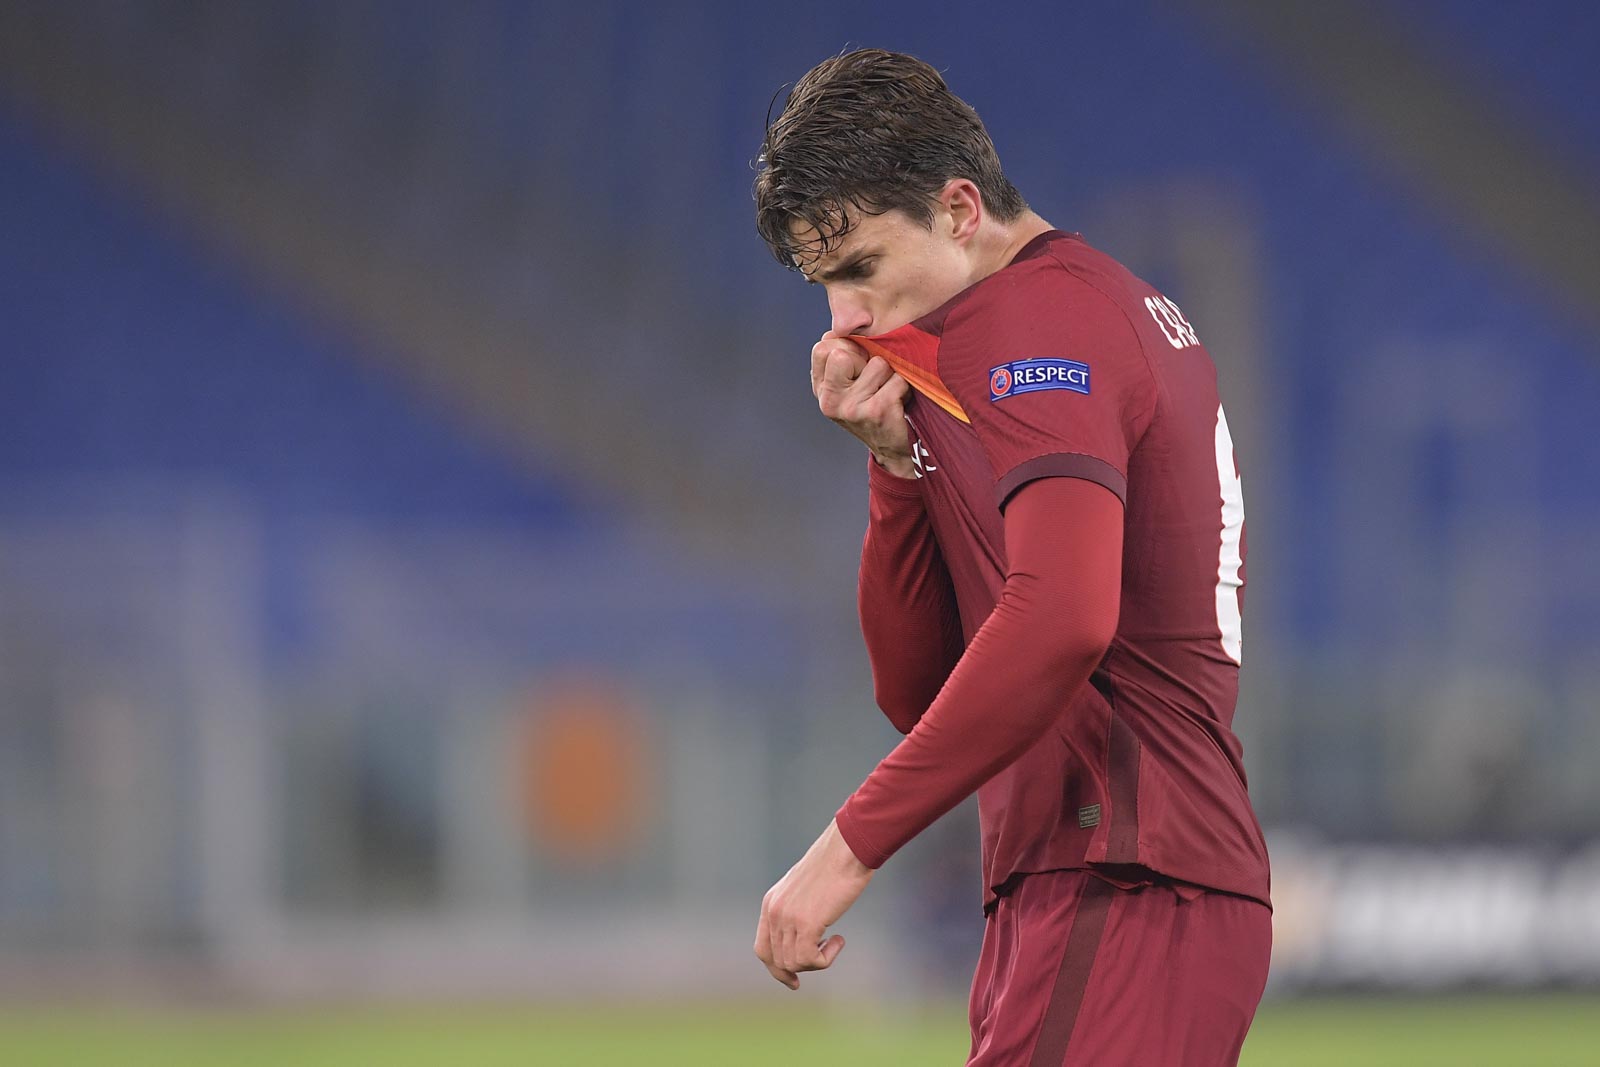 Roma 3-1 Young Boys Bern, notat e lojtarëve: Shkëlqen talenti Calafiori